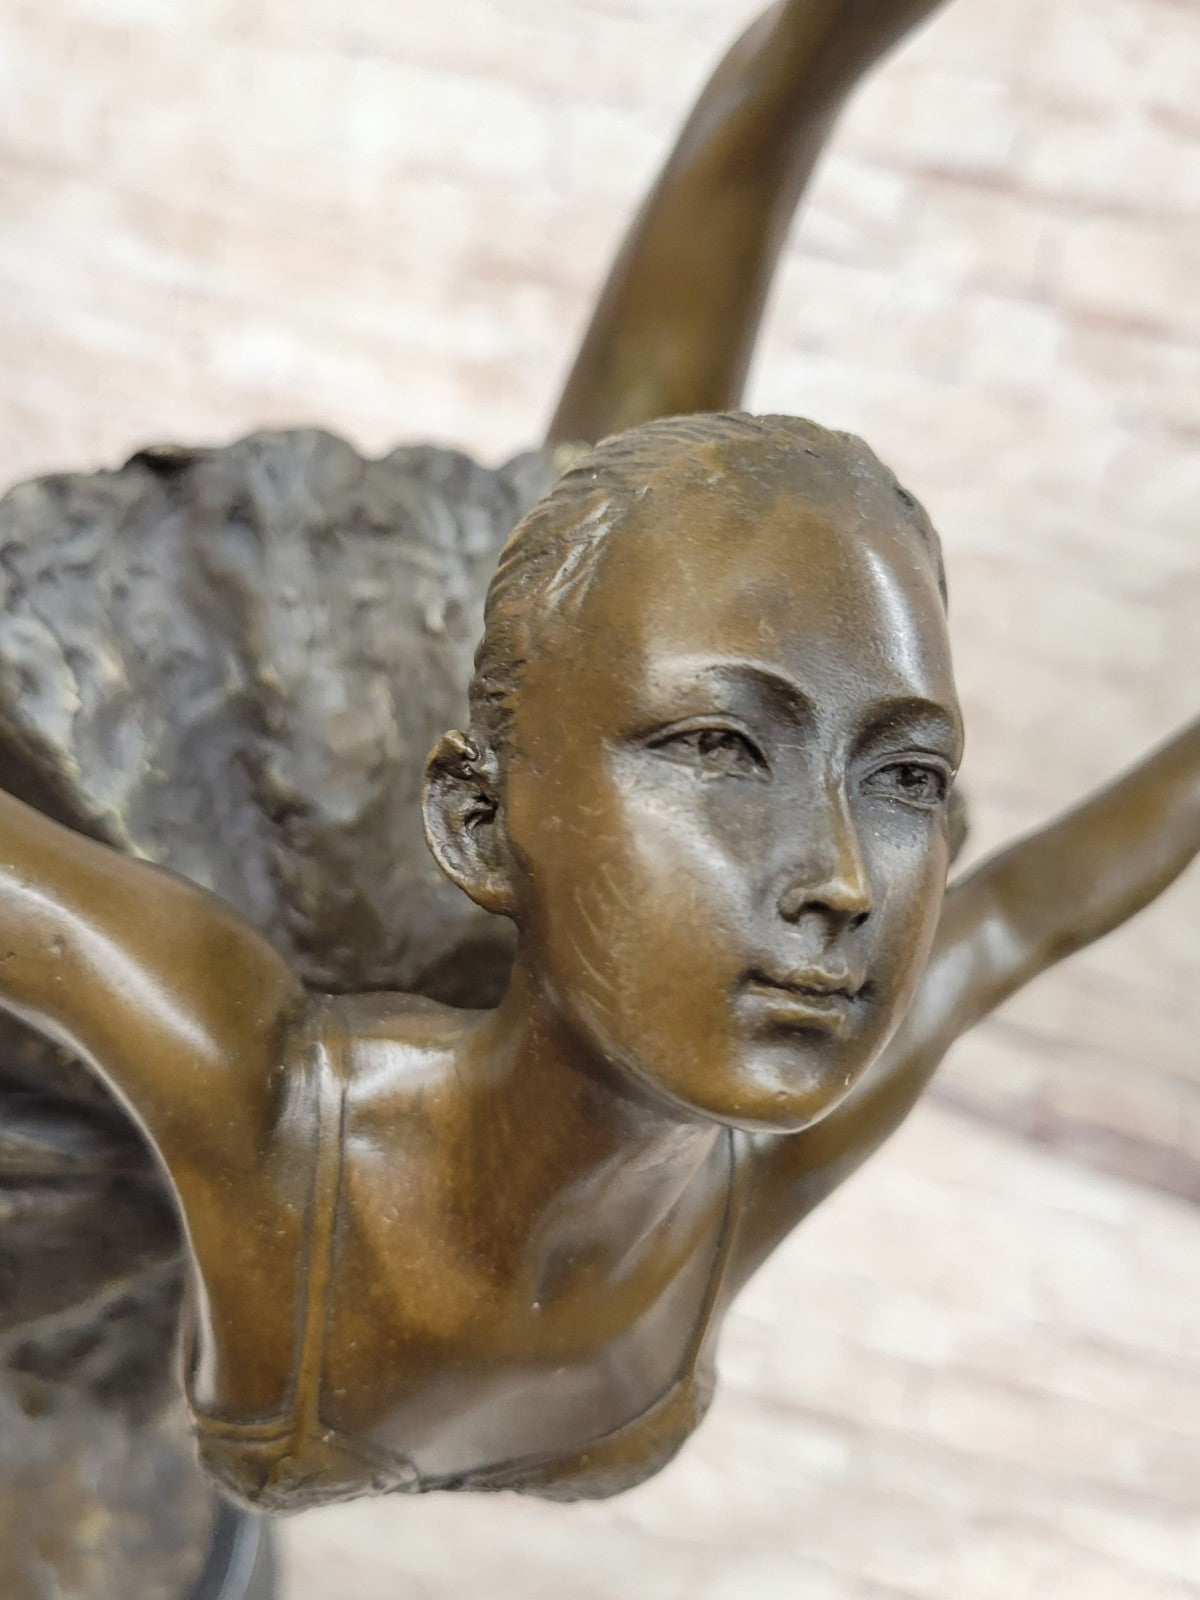 Extra Large Bronze Ballerina Sculpture - Fine Art for Home Office Decor